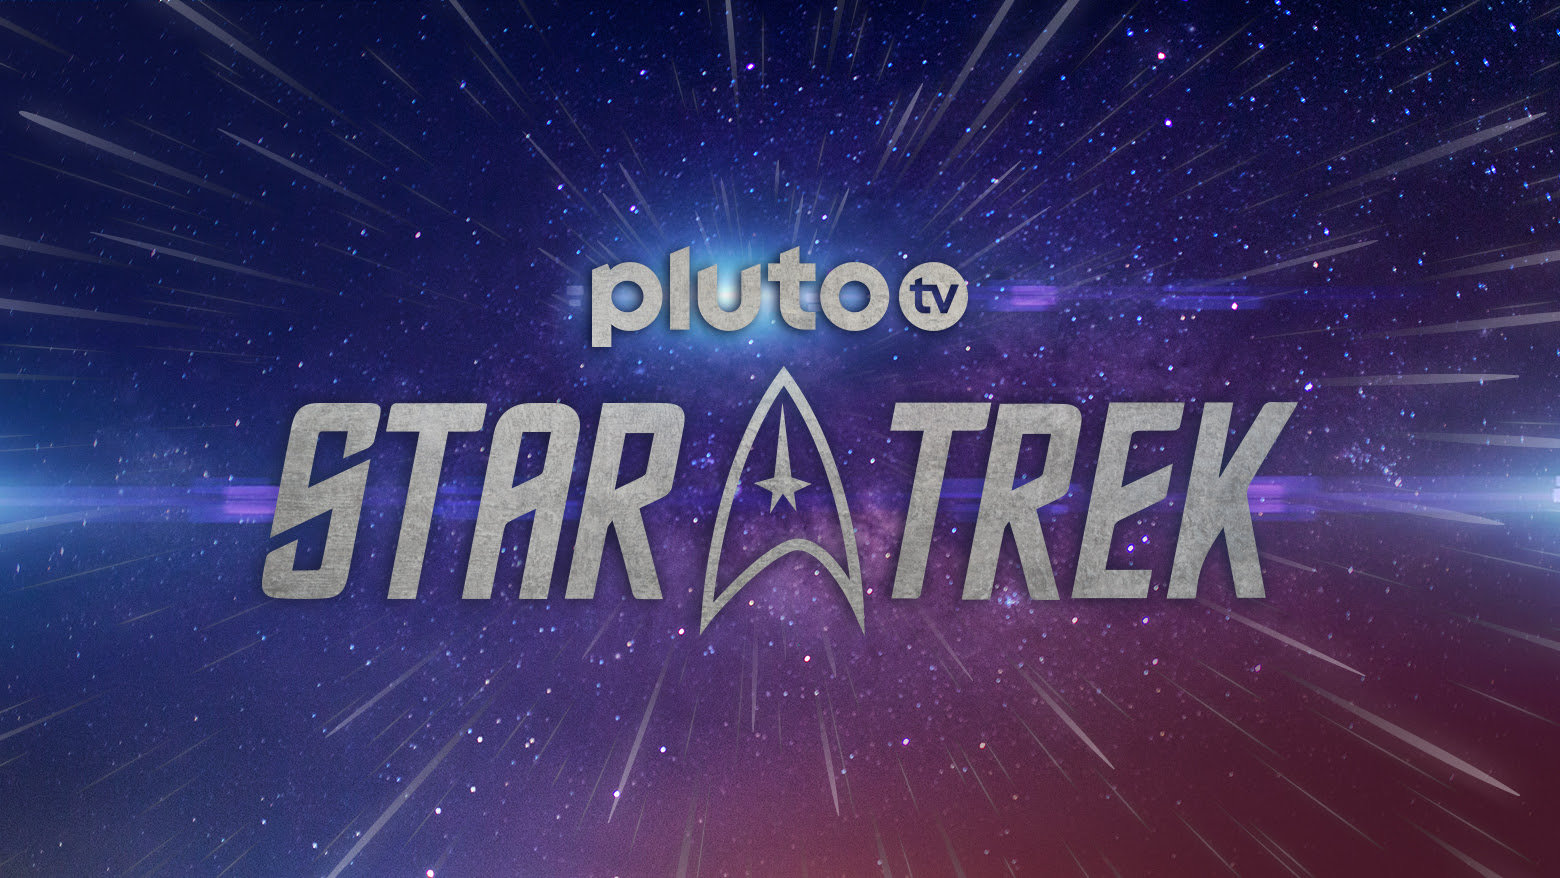 pluto tv star trek into darkness